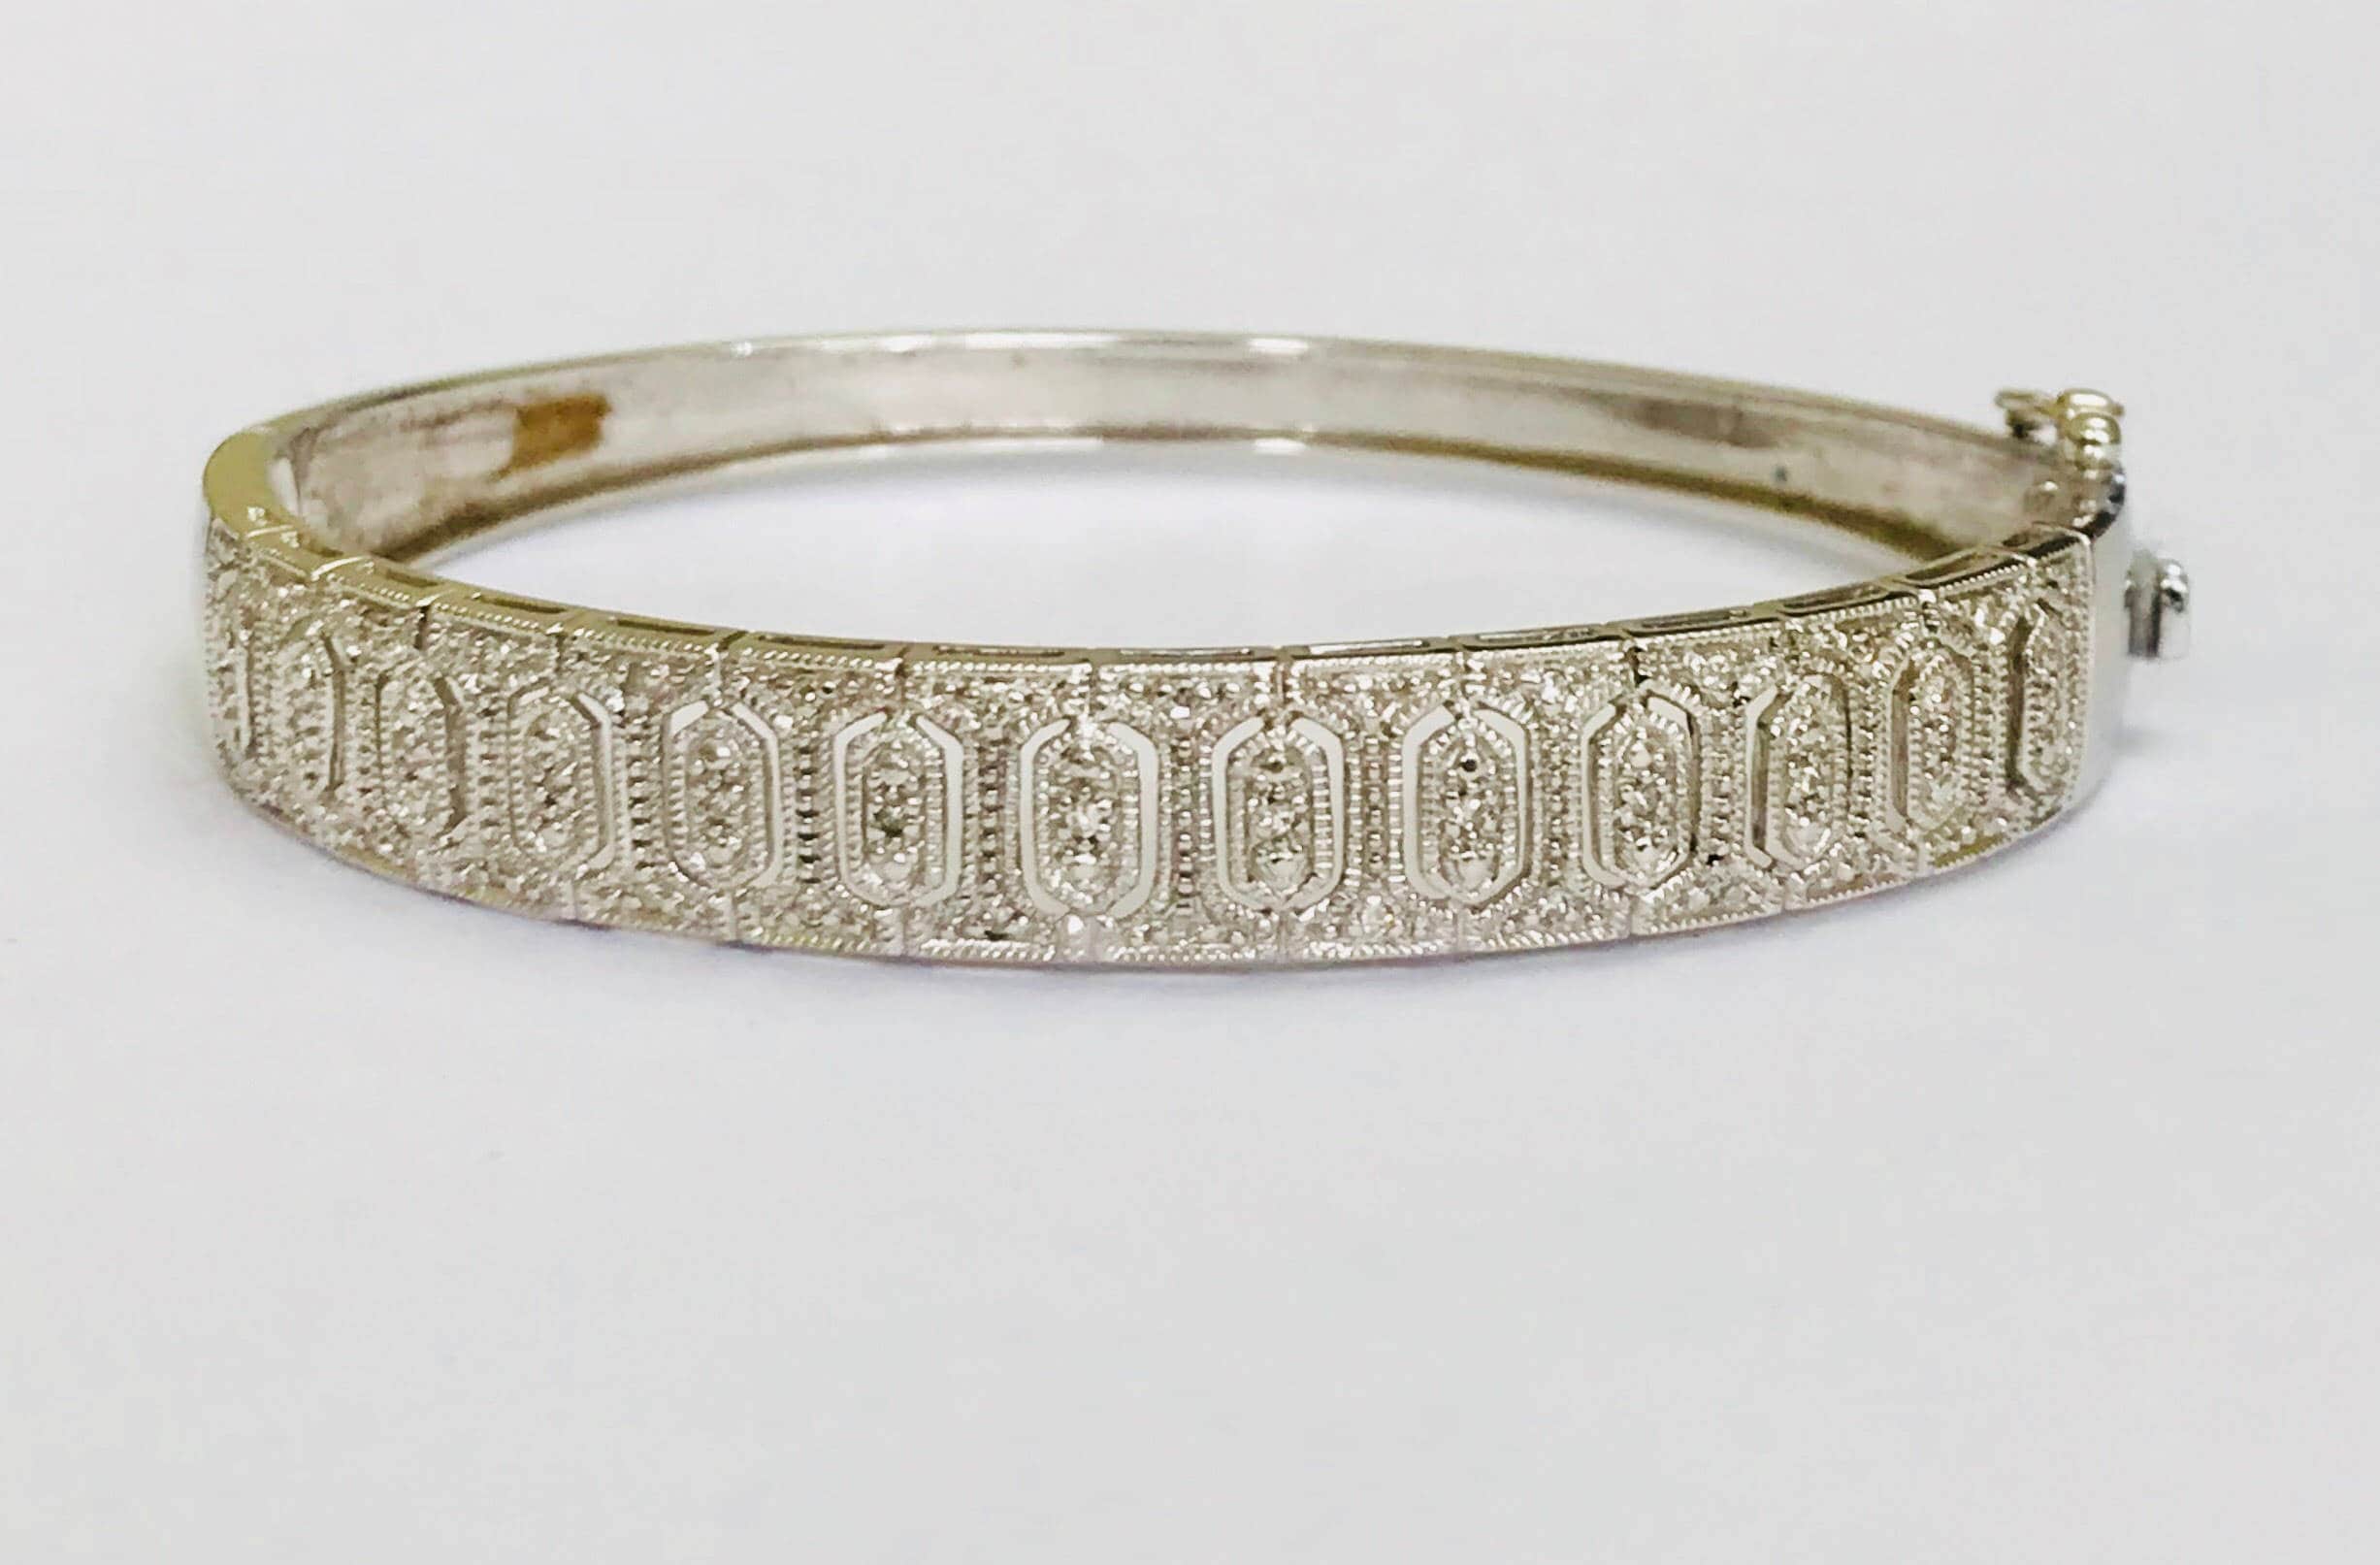 Fabulous 9ct white gold diamond bangle - fully hallmarked